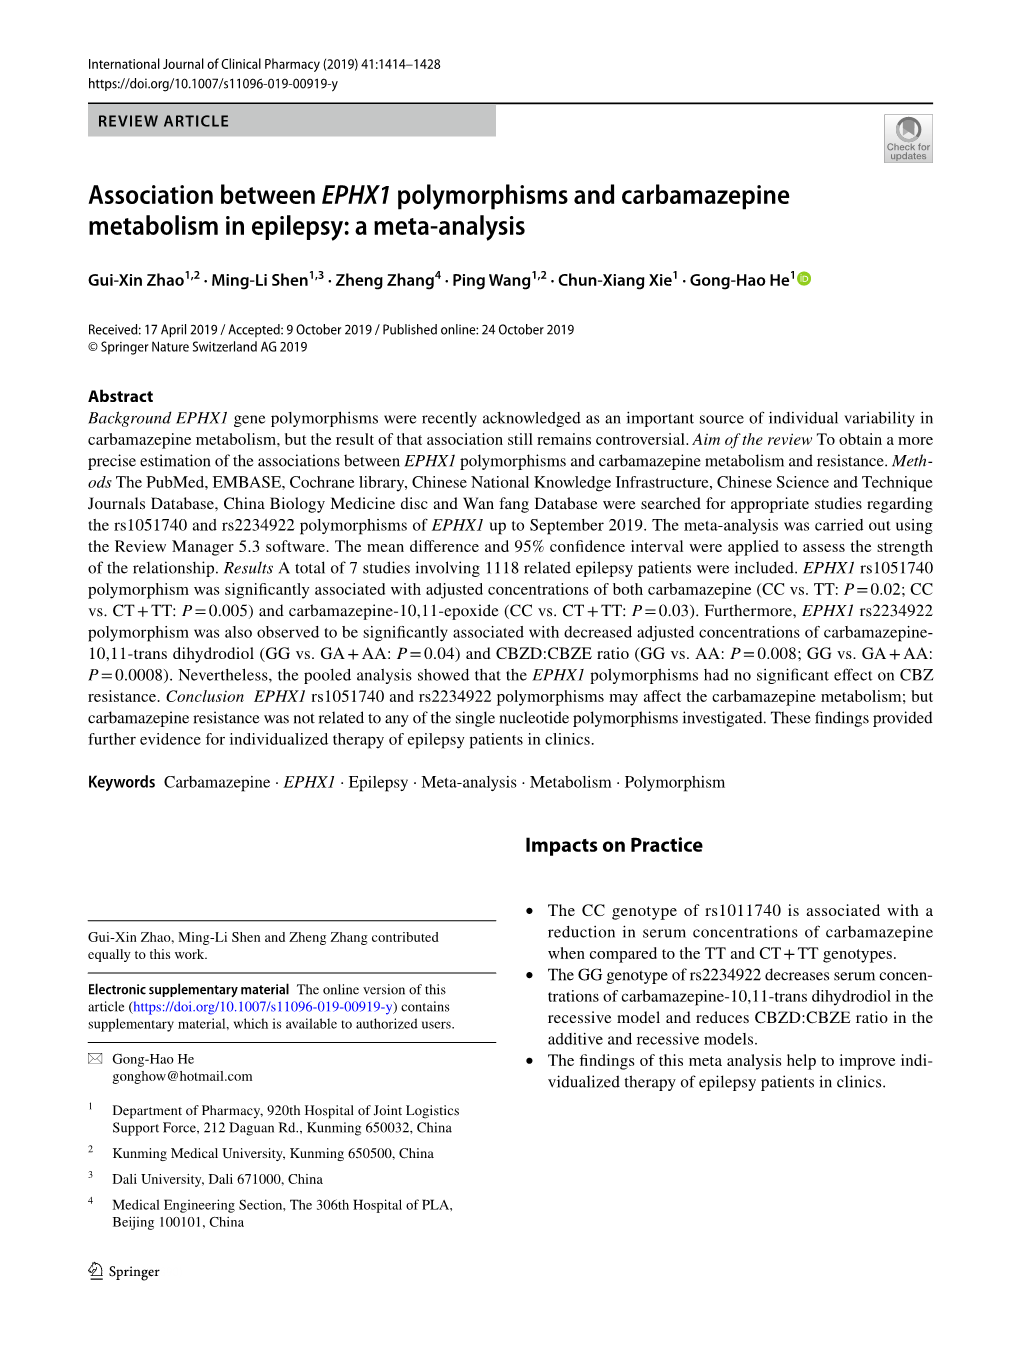 Association Between EPHX1 Polymorphisms and Carbamazepine Metabolism in Epilepsy: a Meta‑Analysis